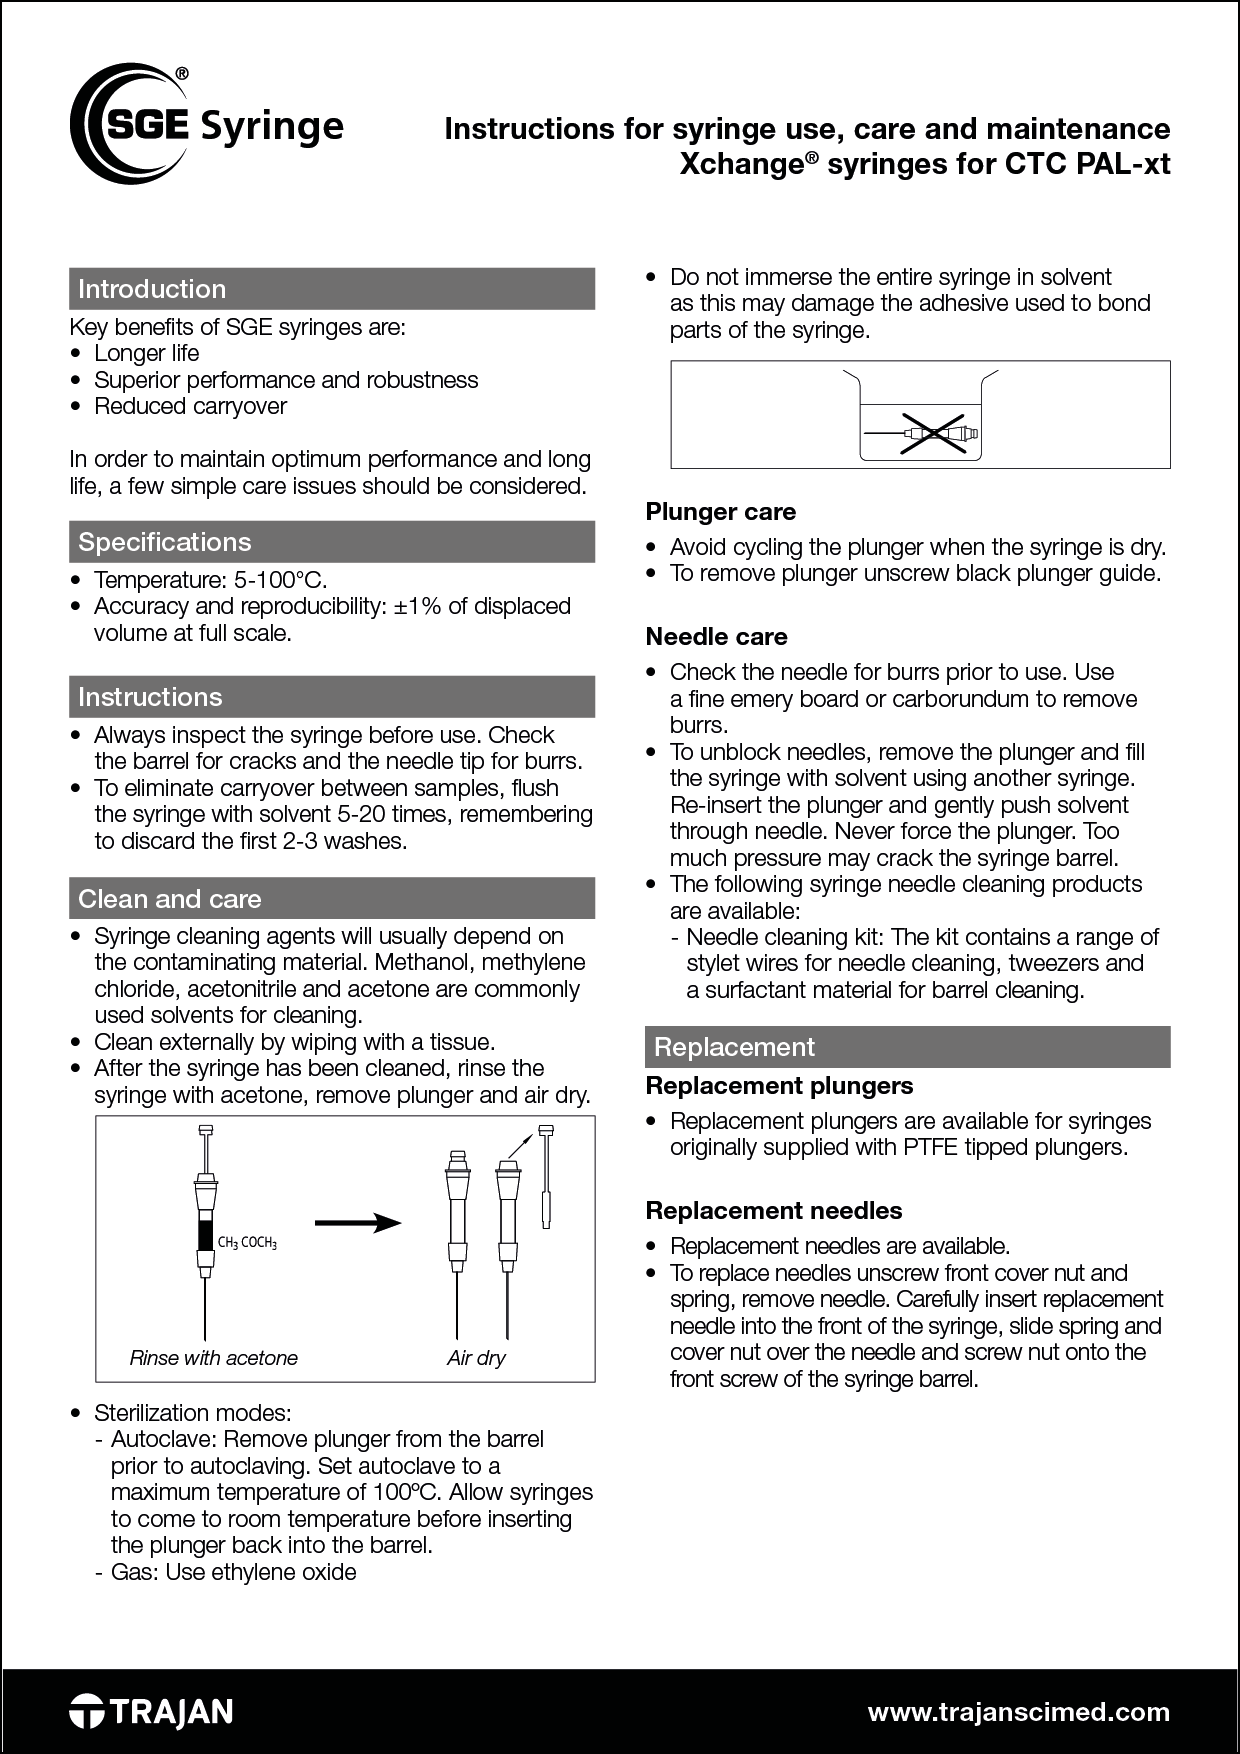 Manual - Instructions for syringe use, care and maintenance XCHANGE® syringes for CTC PAL-xt